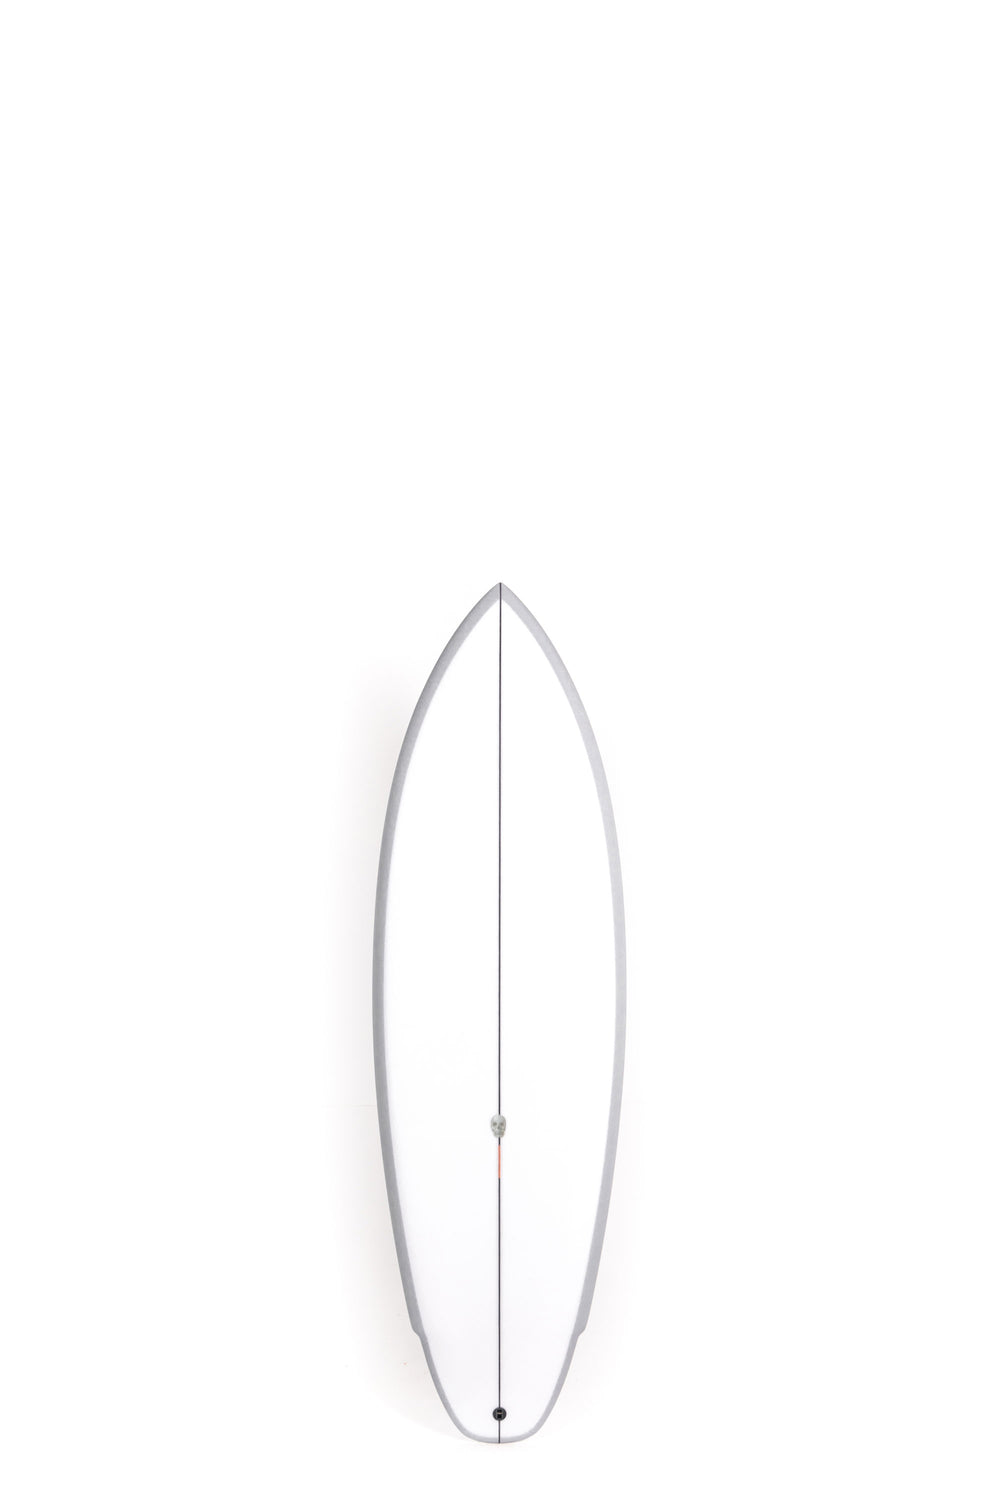 Pukas Surf Shop - Christenson Surfboards - LANE SPLITTER - 5'5